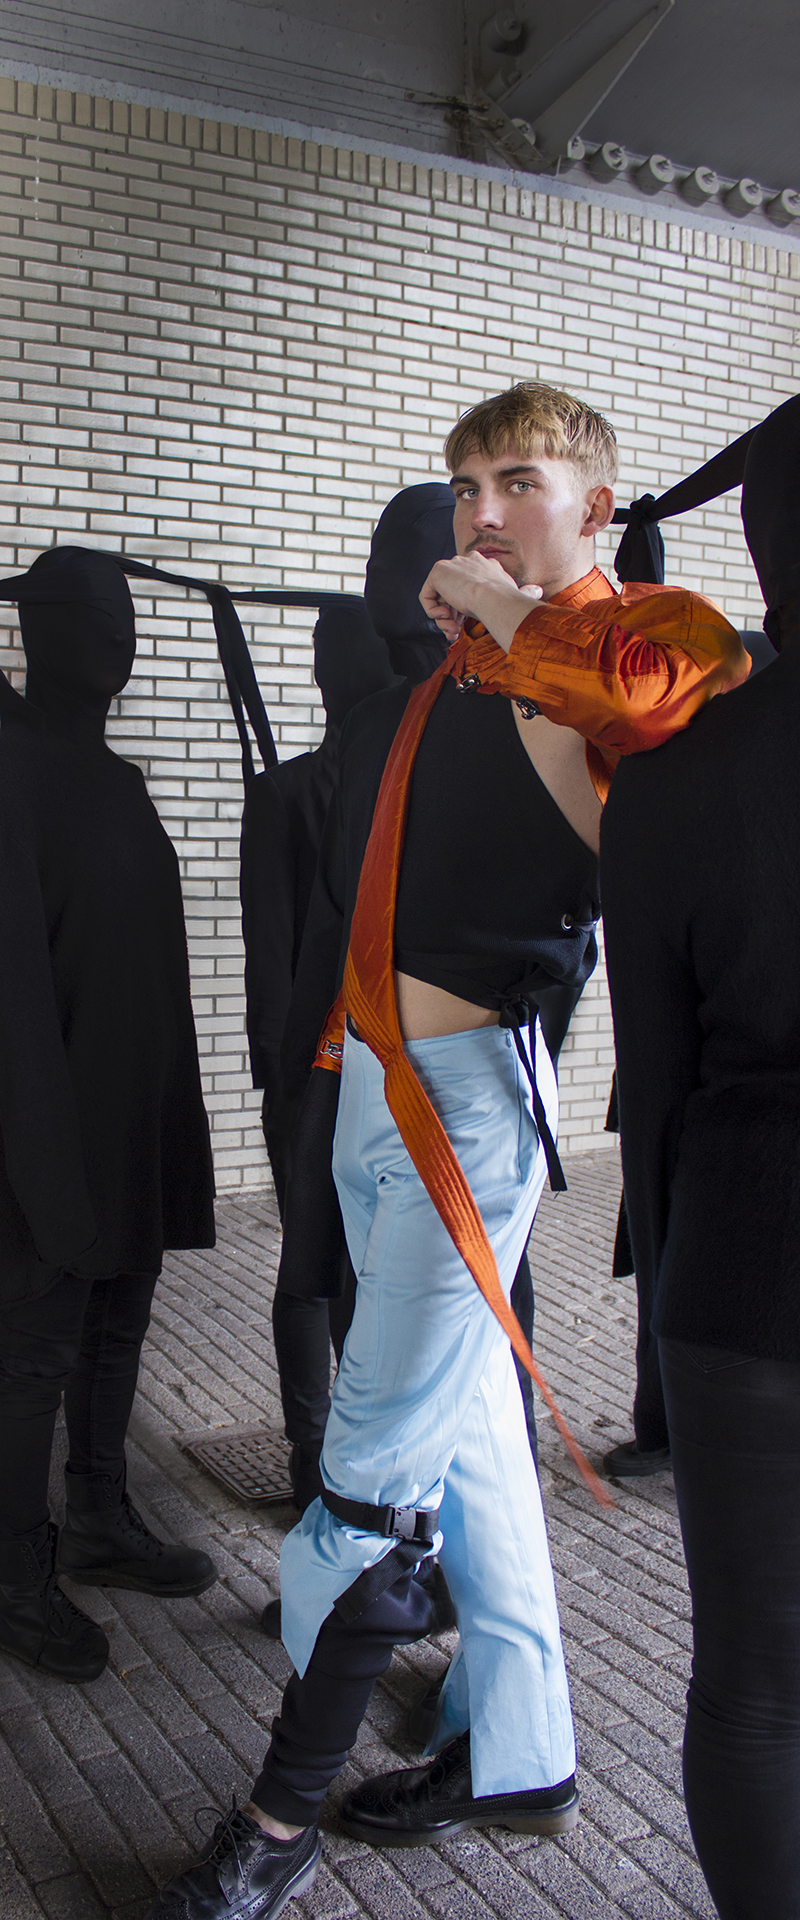 Jacket by Michelle Lievaart Top by Laura Aanen Trouser 1 by Laura Aanen Trouser 2 by Kim Kivits.